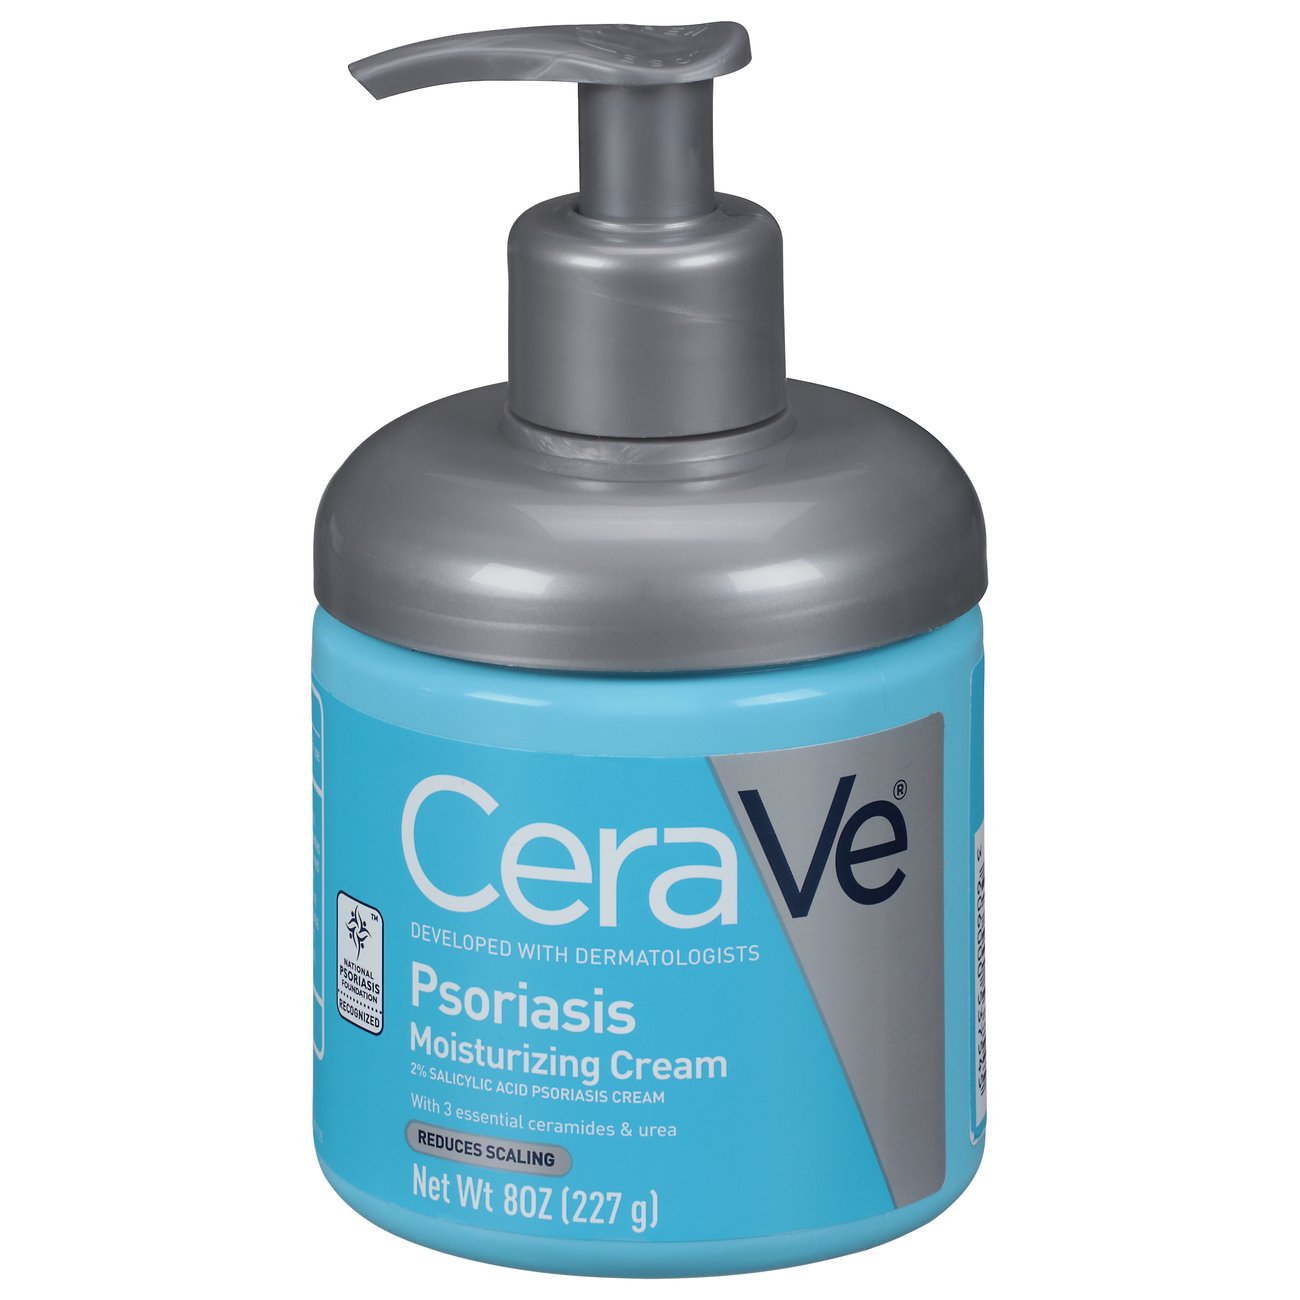 psoriasis moisturizing cream cerave)